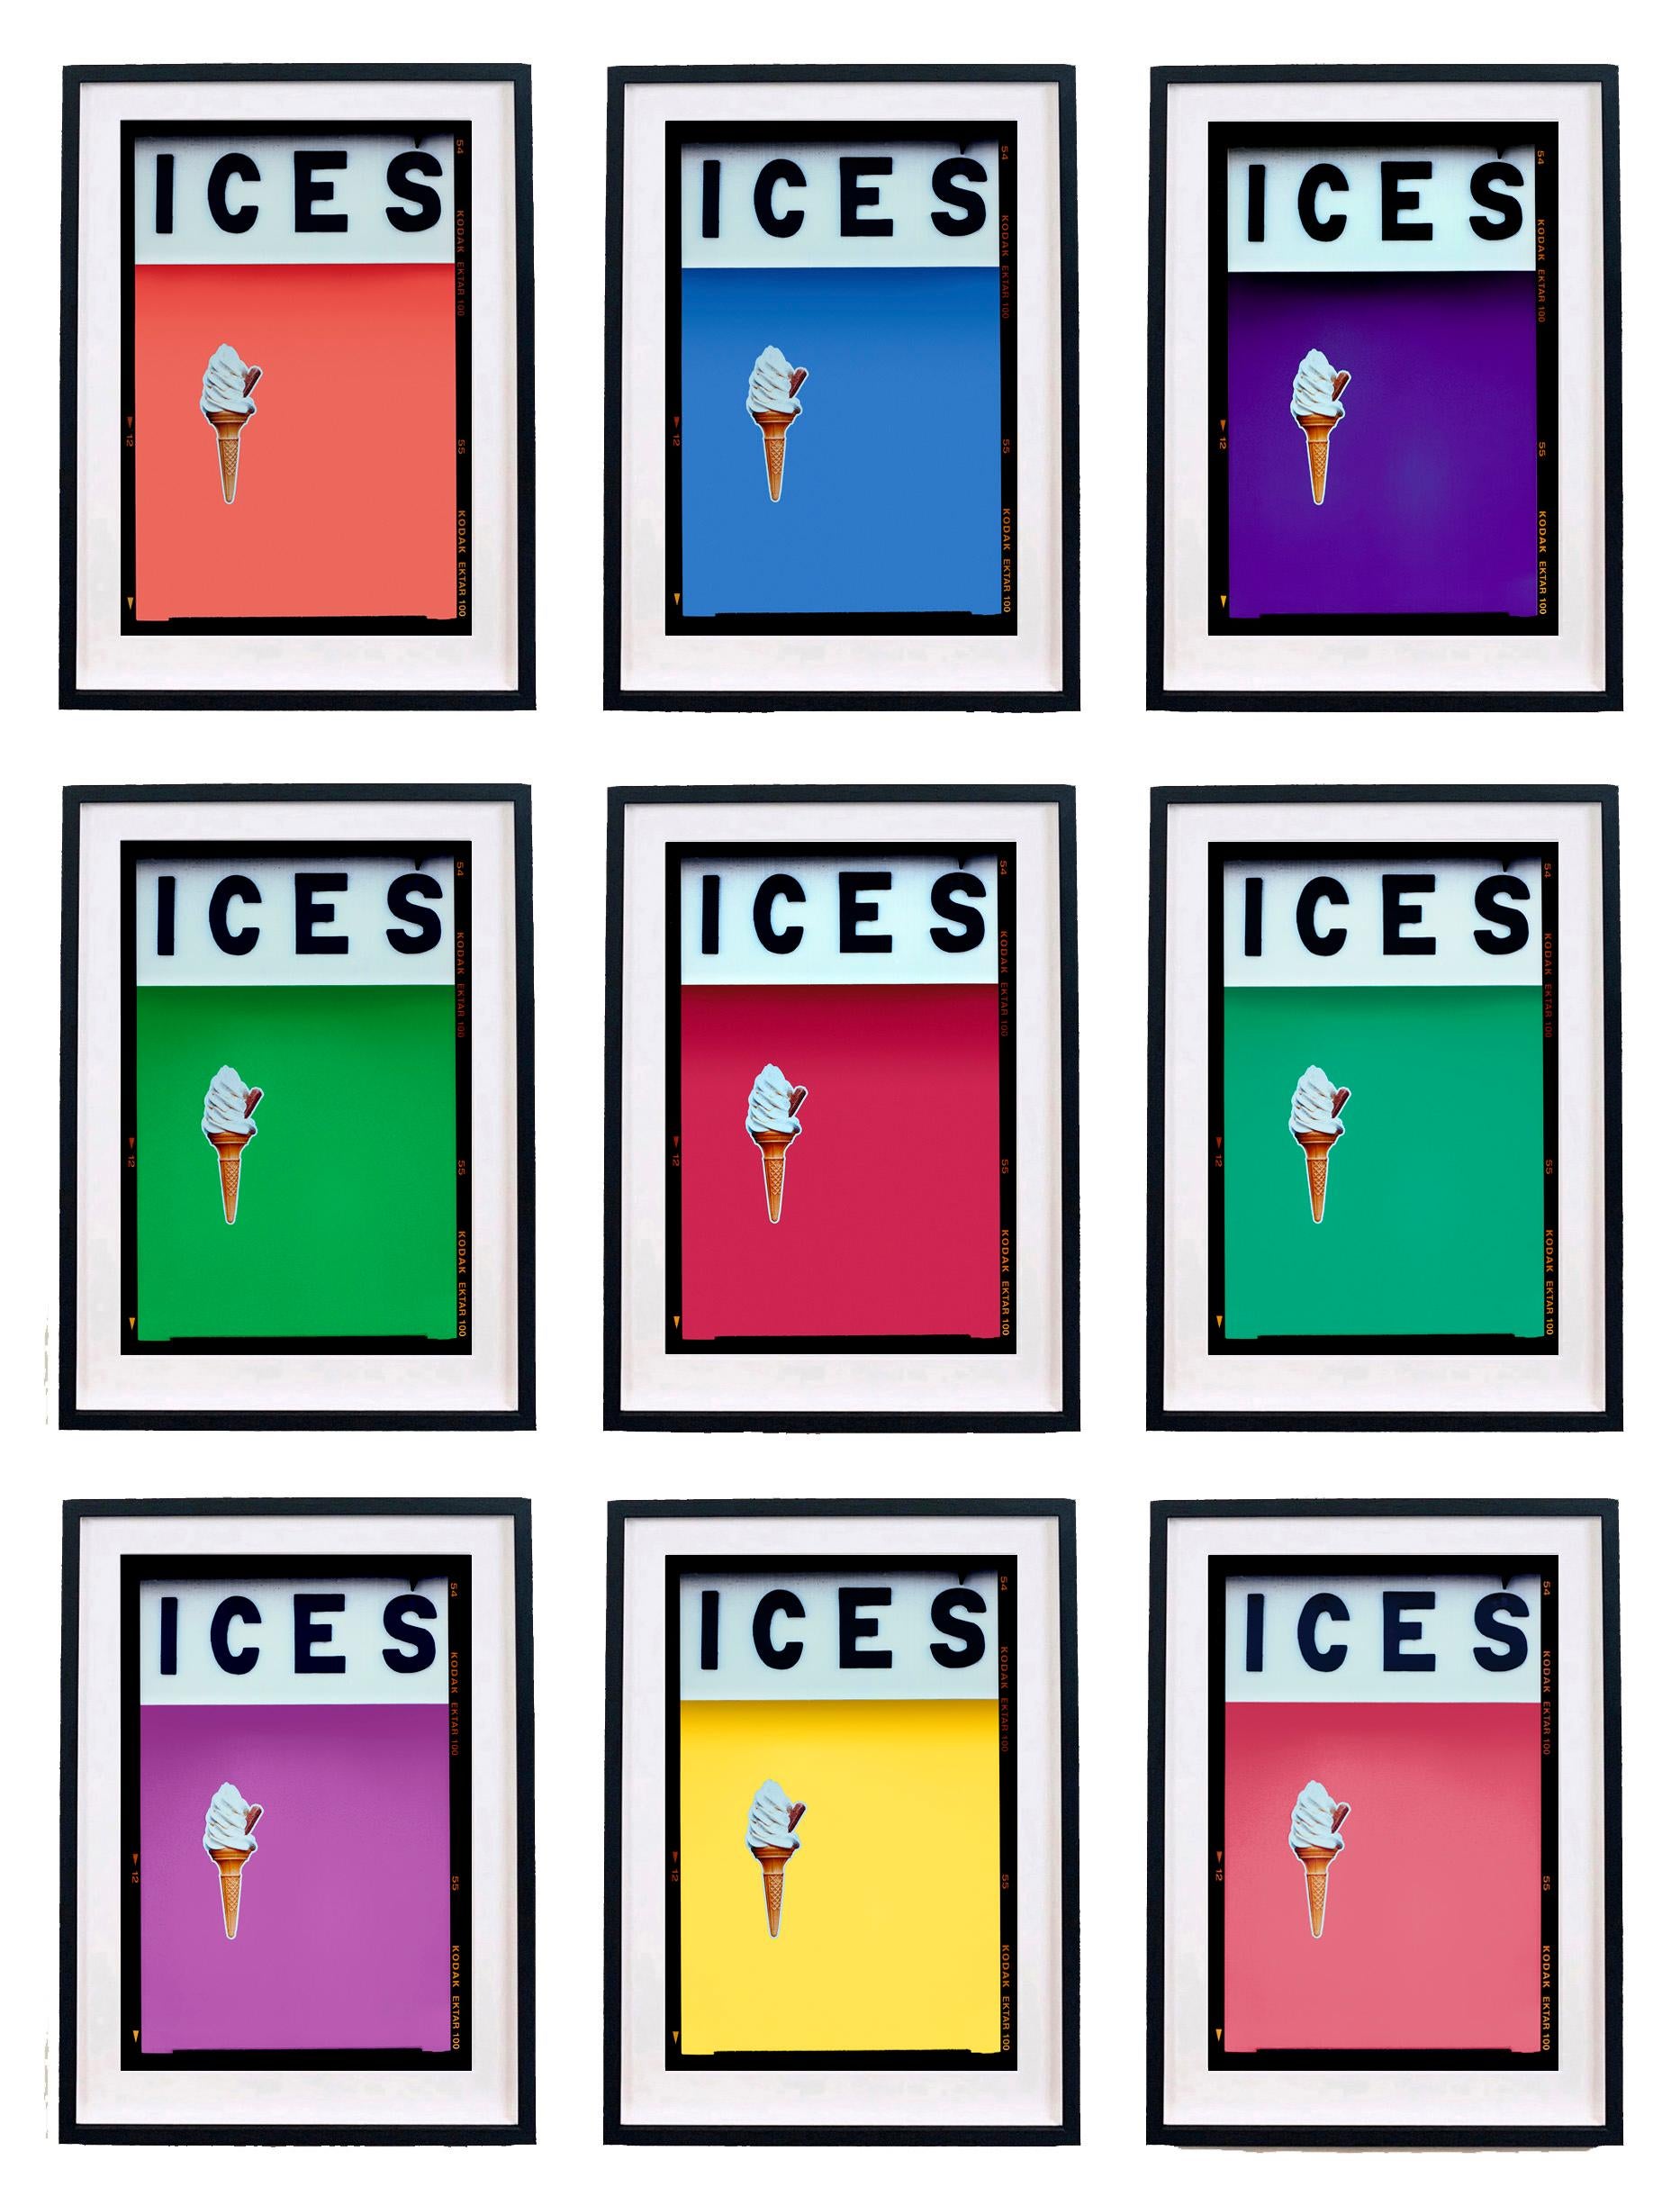 Richard Heeps Color Photograph - ICES Multicolor Set of Nine Framed Colour Photography Artworks